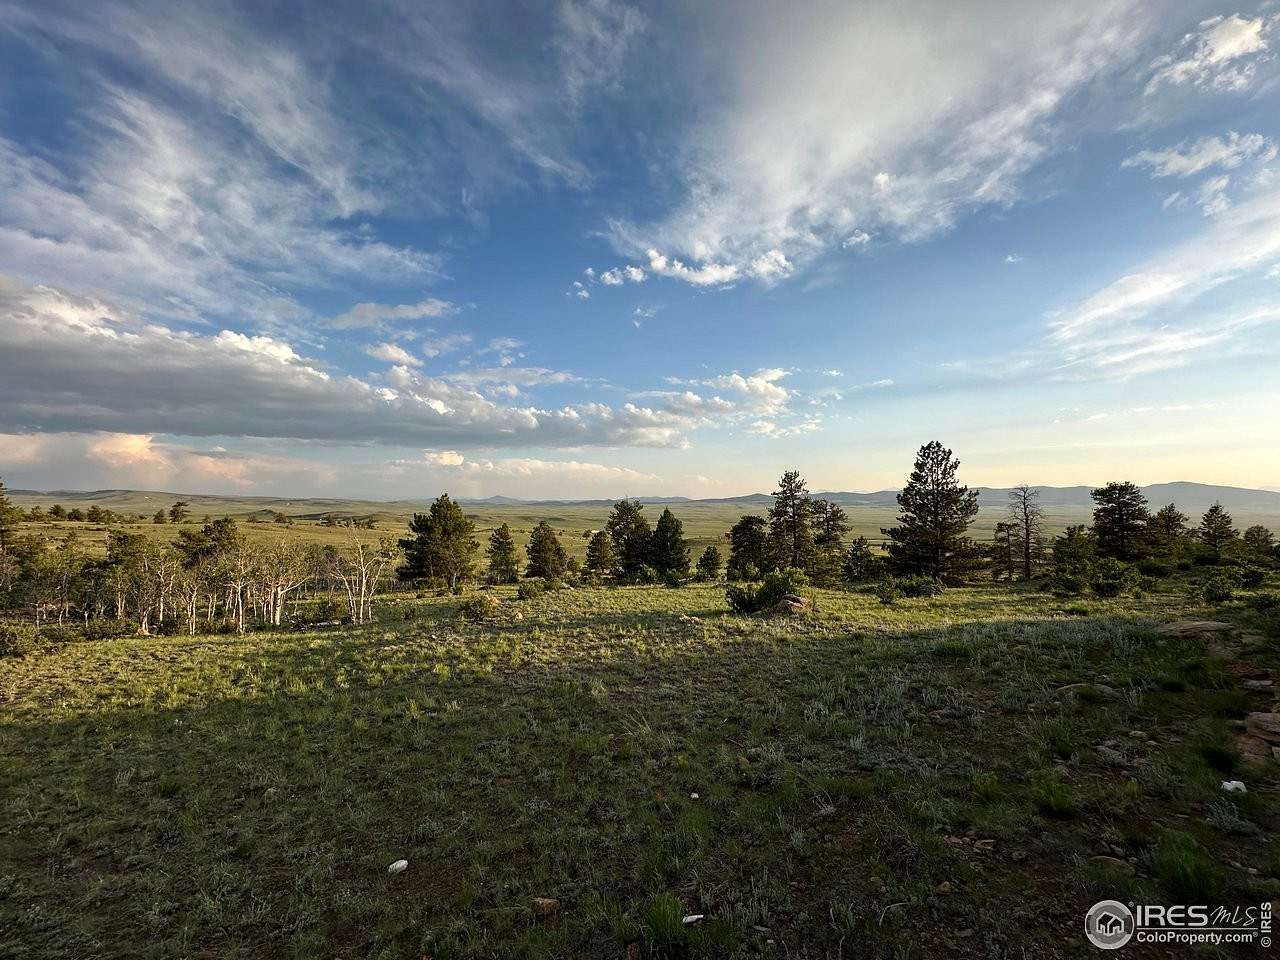 6.3 Acres of Land for Sale in Hartsel, Colorado